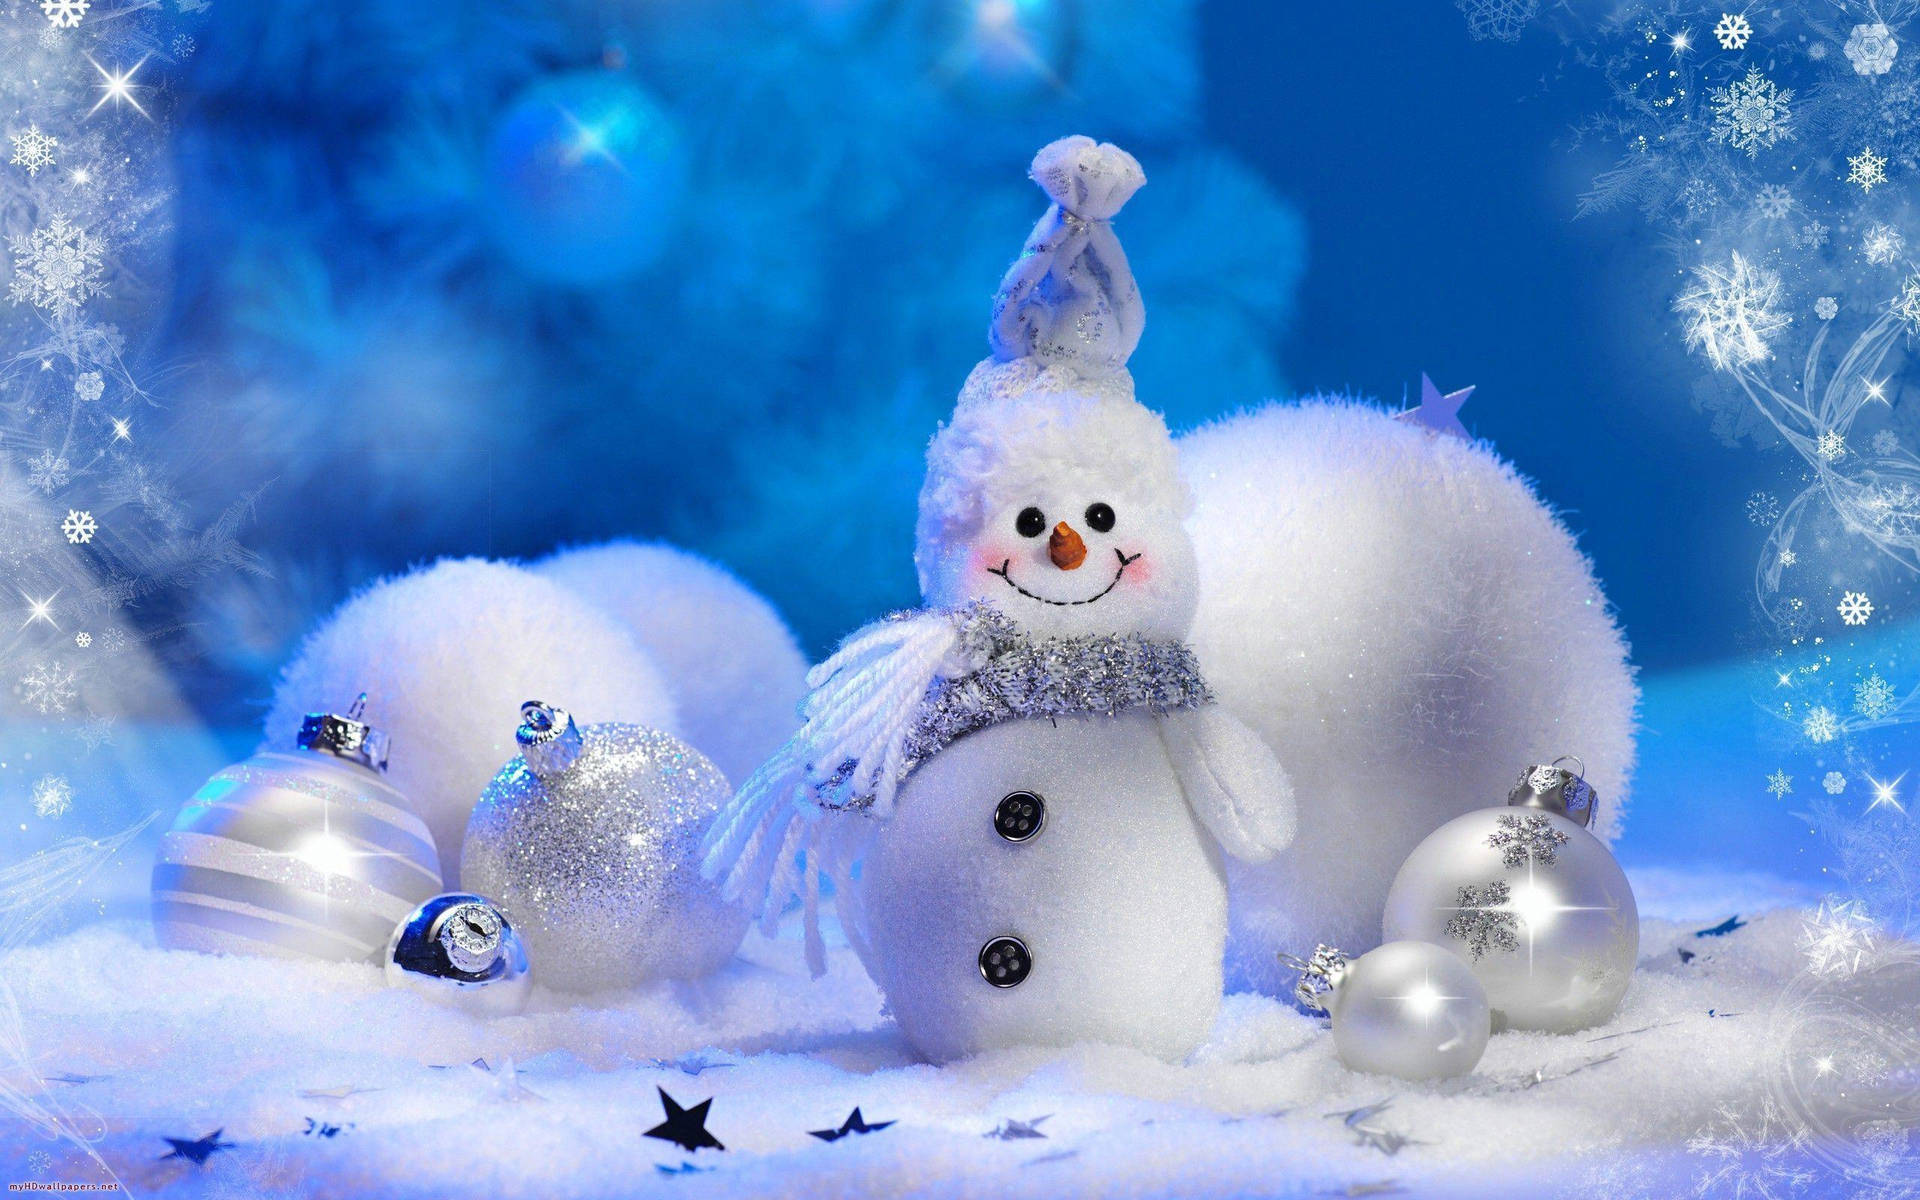 Pretty White Christmas With Snowman Wallpaper